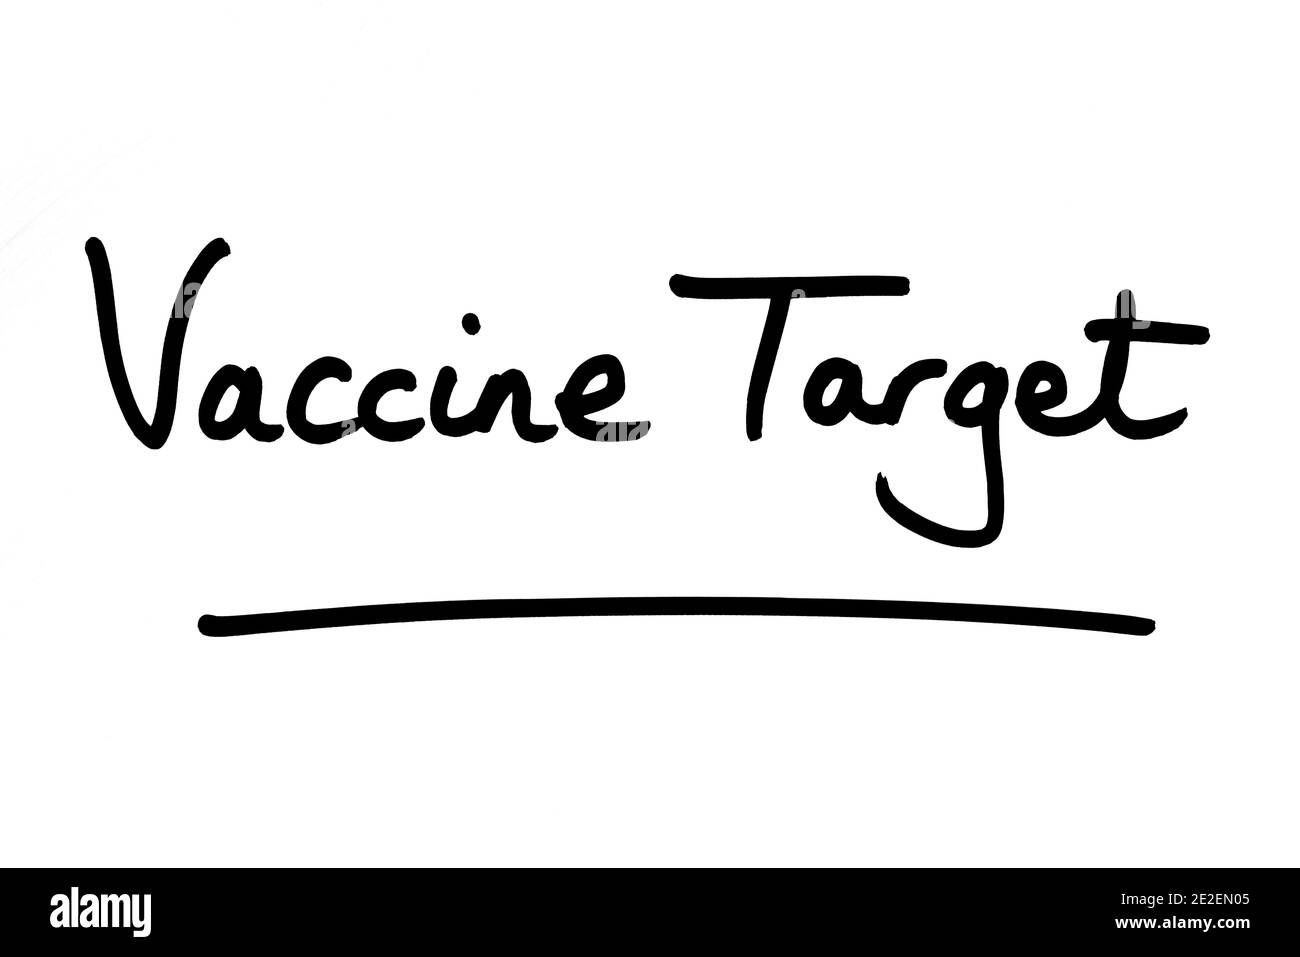 Vaccine Target, handwritten on a white background. Stock Photo